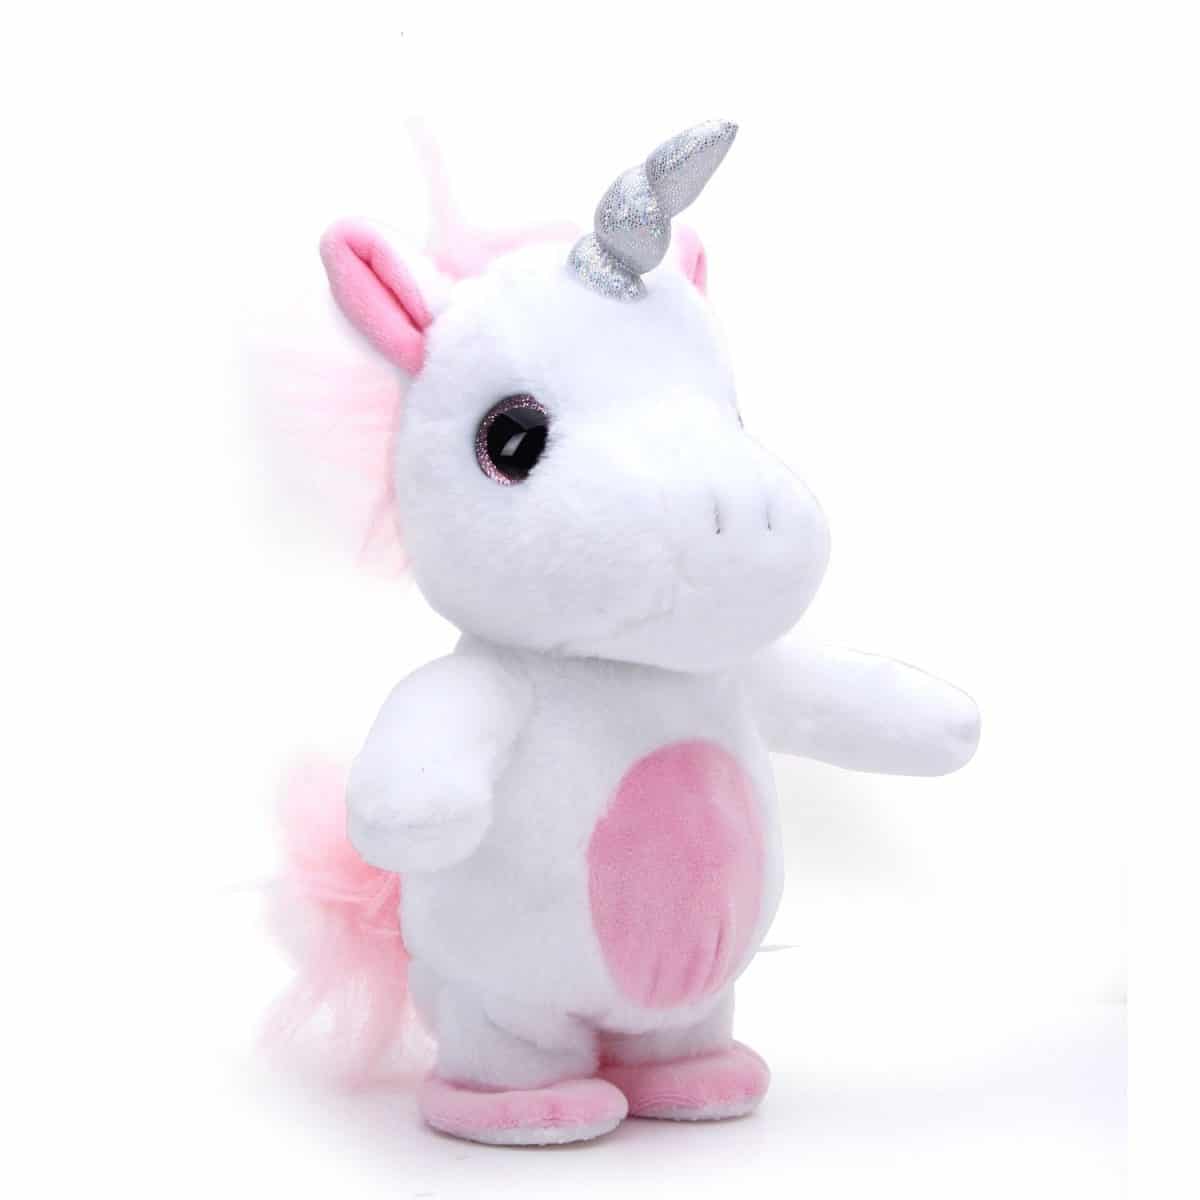 unicorn toy that moves